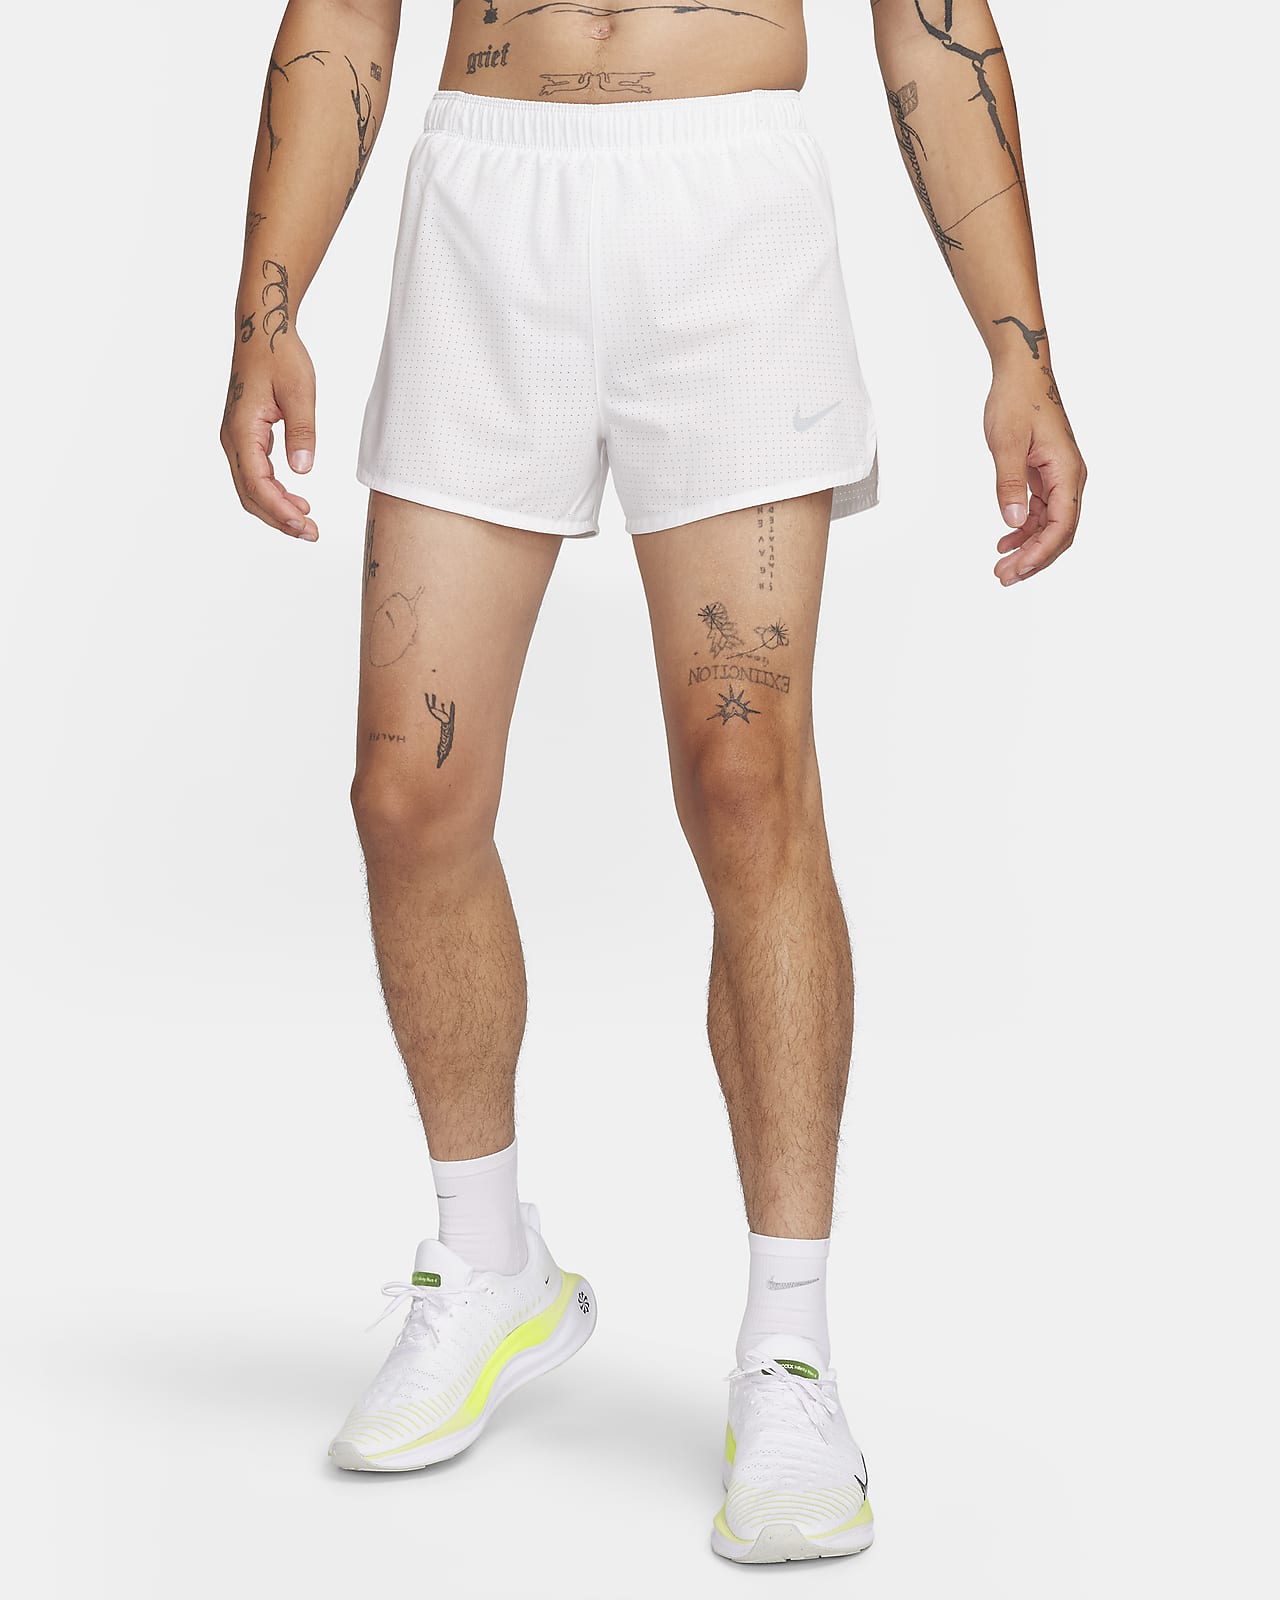 Nike Fast Dri-FIT 8 cm-es, belső rövidnadrággal bélelt férfi futórövidnadrág